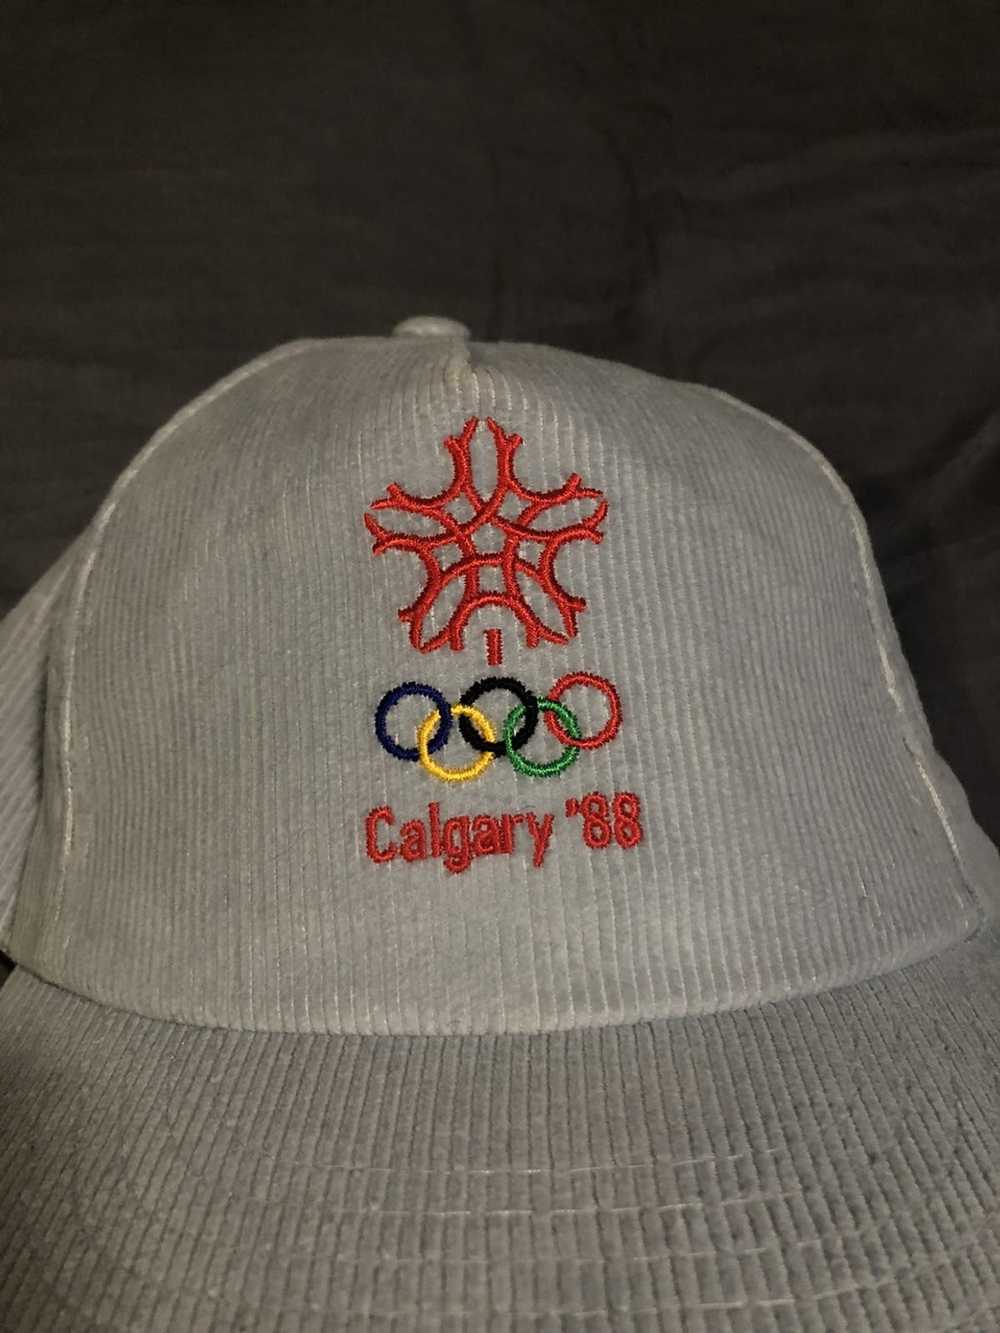 Vintage Vintage 1988 Calgary Olympics Corduroy Hat - image 2